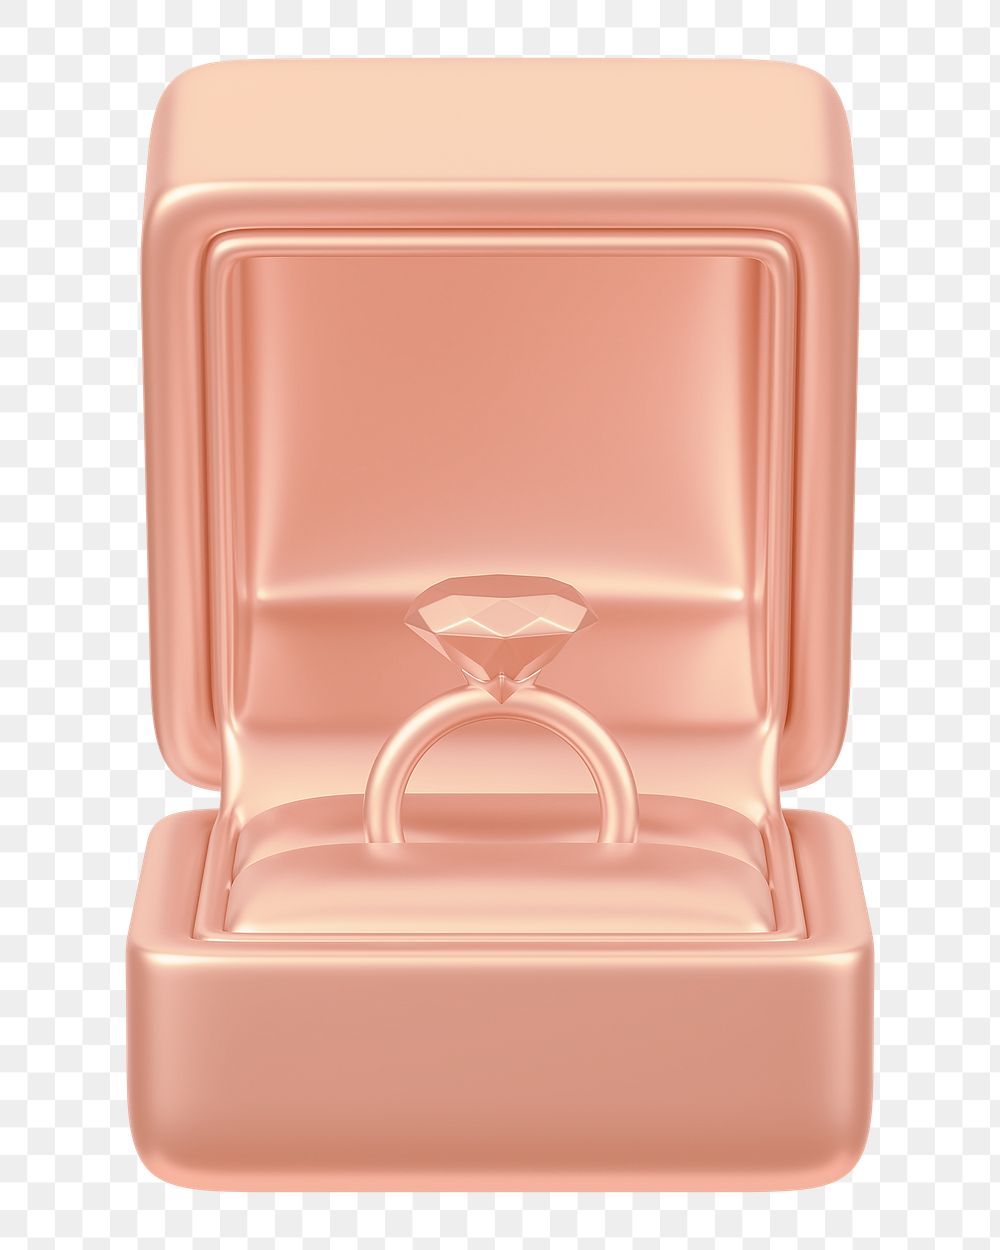 Copper engagement ring box png 3D illustration, transparent background